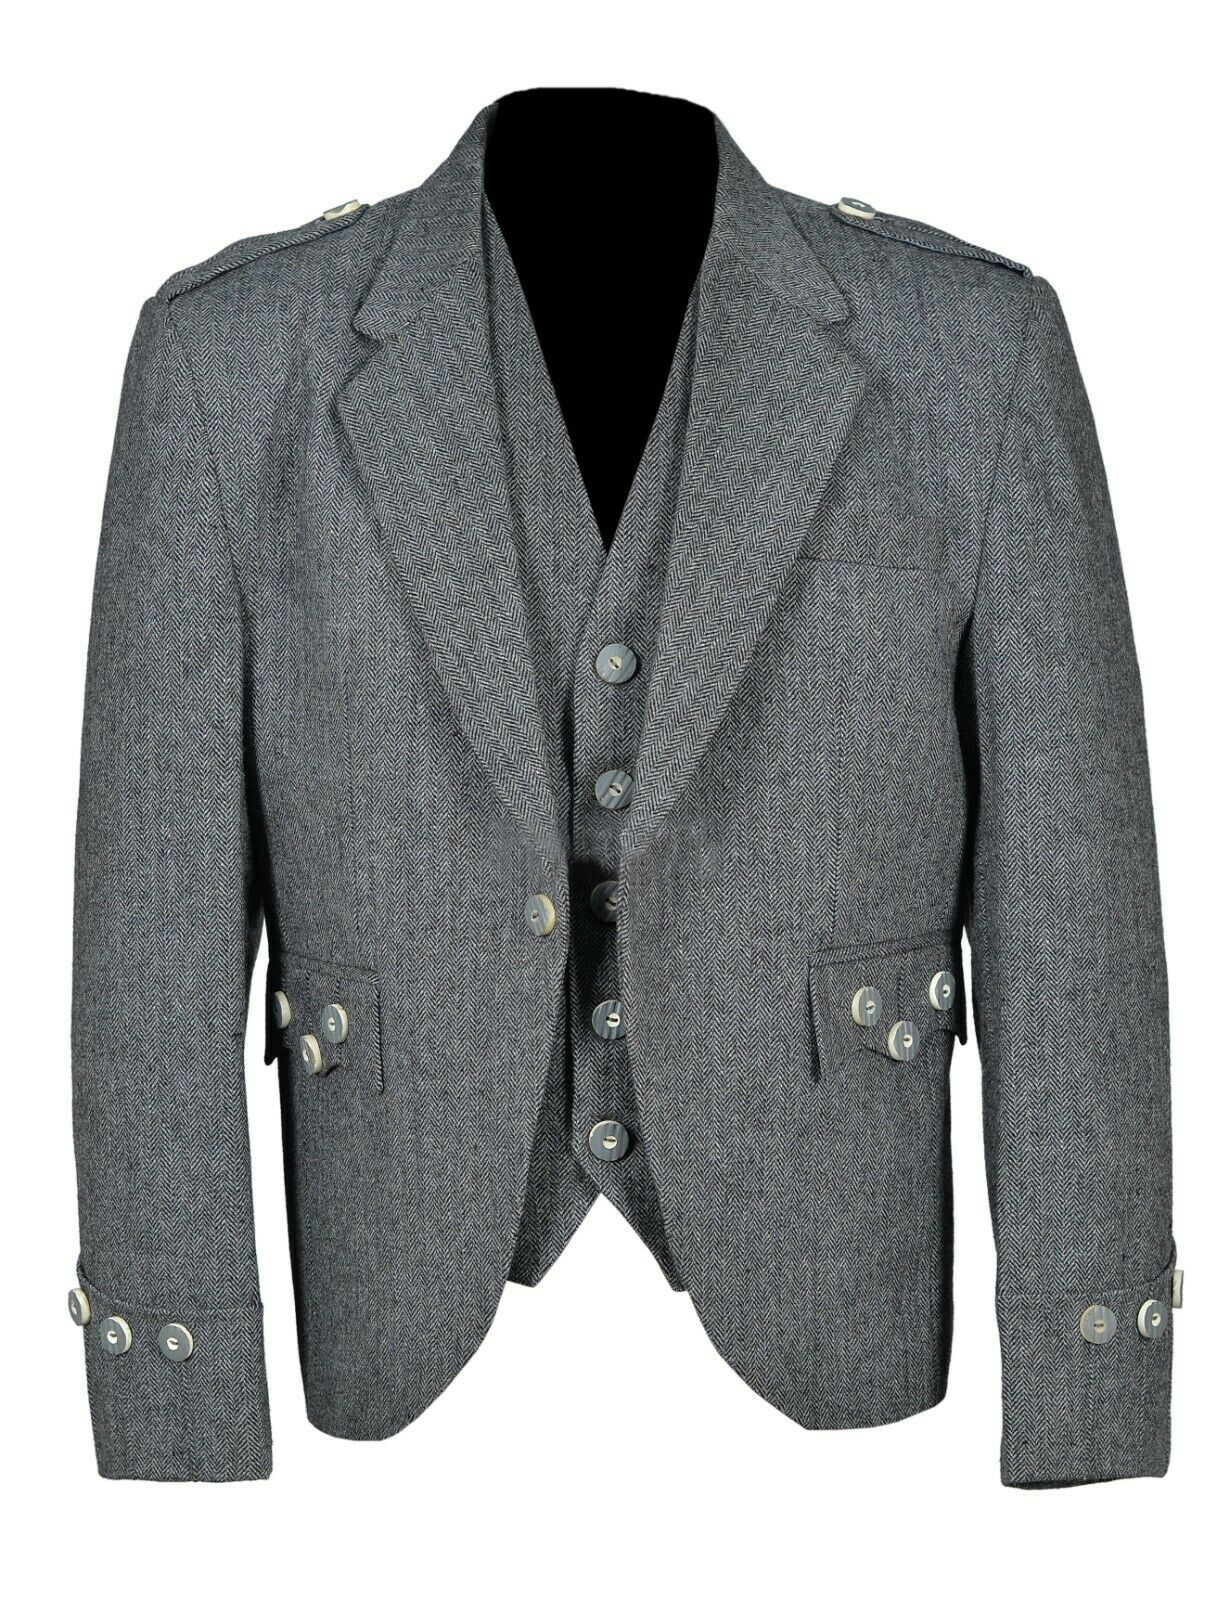 Men's Tweed Crail Highland Kilt Jacket & Vest Scottish Wedding Dress